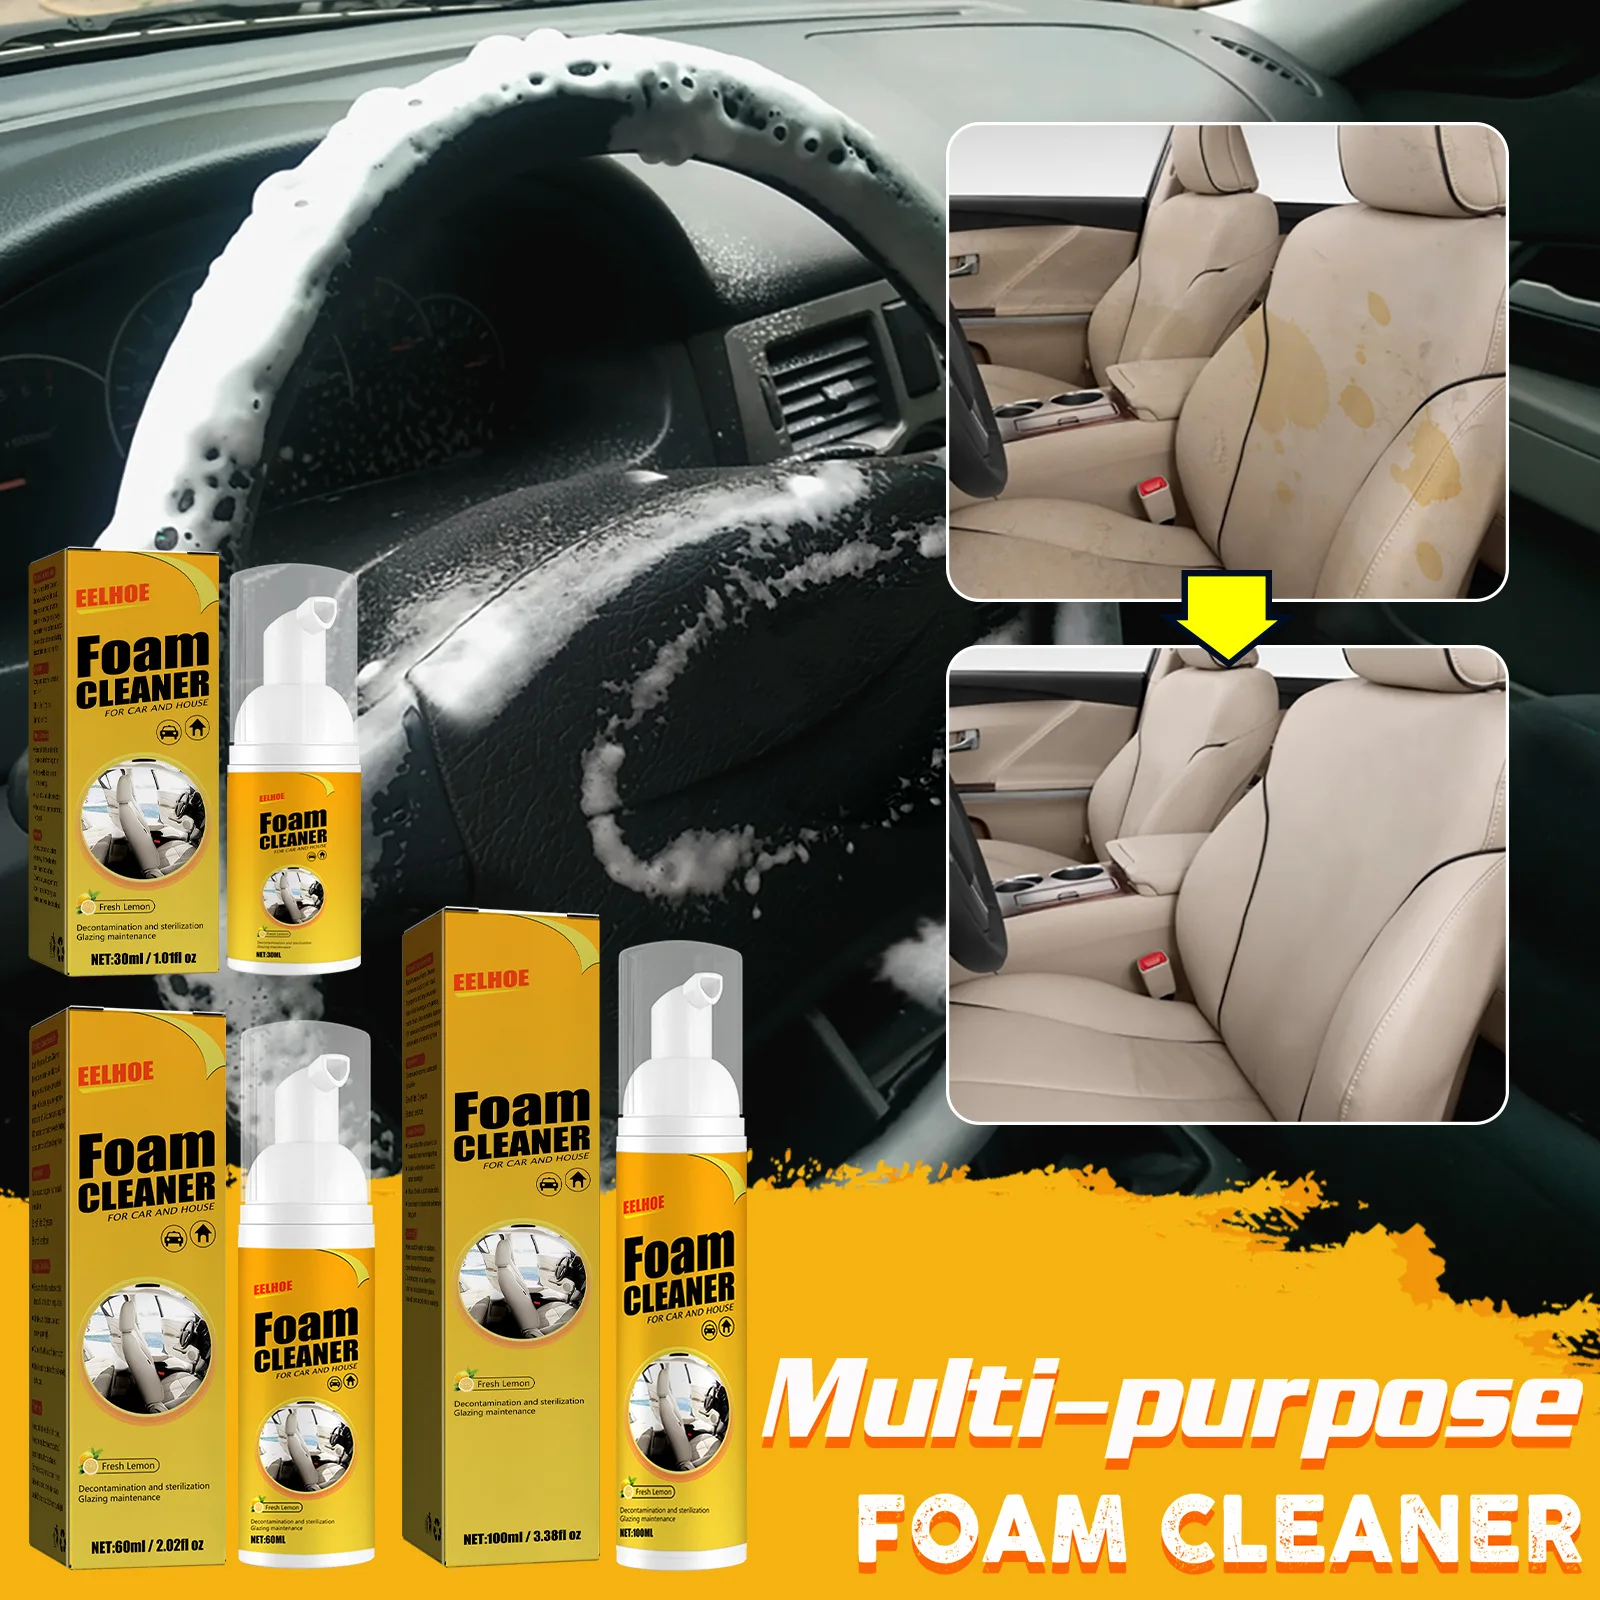 https://ae01.alicdn.com/kf/S02d5d290b6184881ba2ba118ff312b3ck/100ML-Multipurpose-Foam-Cleaner-Spray-Cleaning-Tool-Car-Car-Interior-Home-Cleaning-Spray-Anti-Aging-Foam.jpg